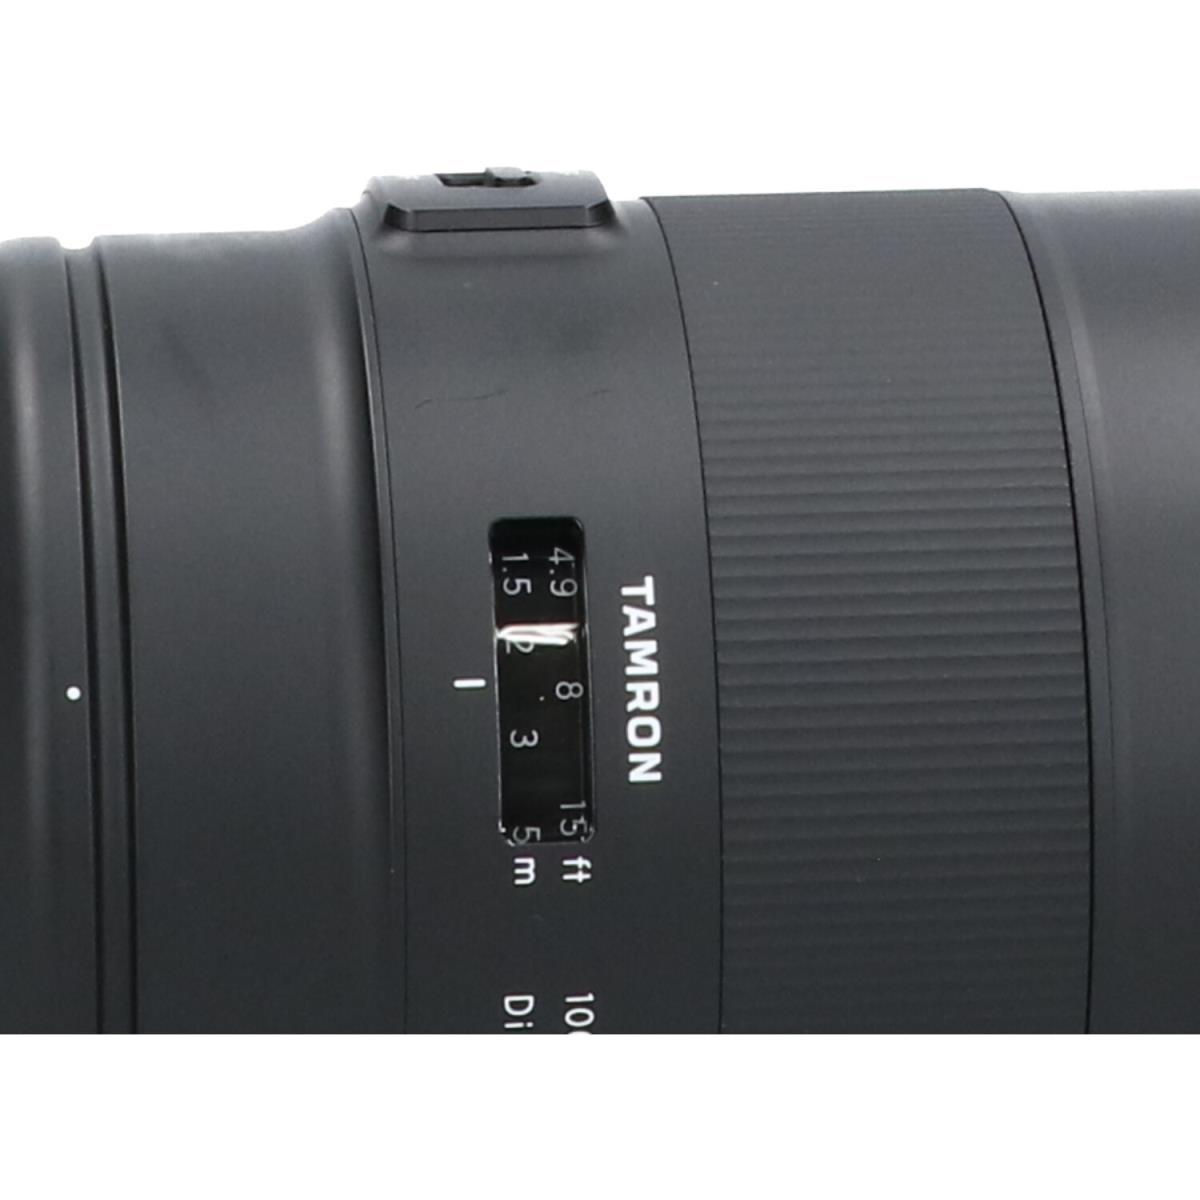 TAMRON Nikon 100-400mm F4.5-6.3 DIVCUSD